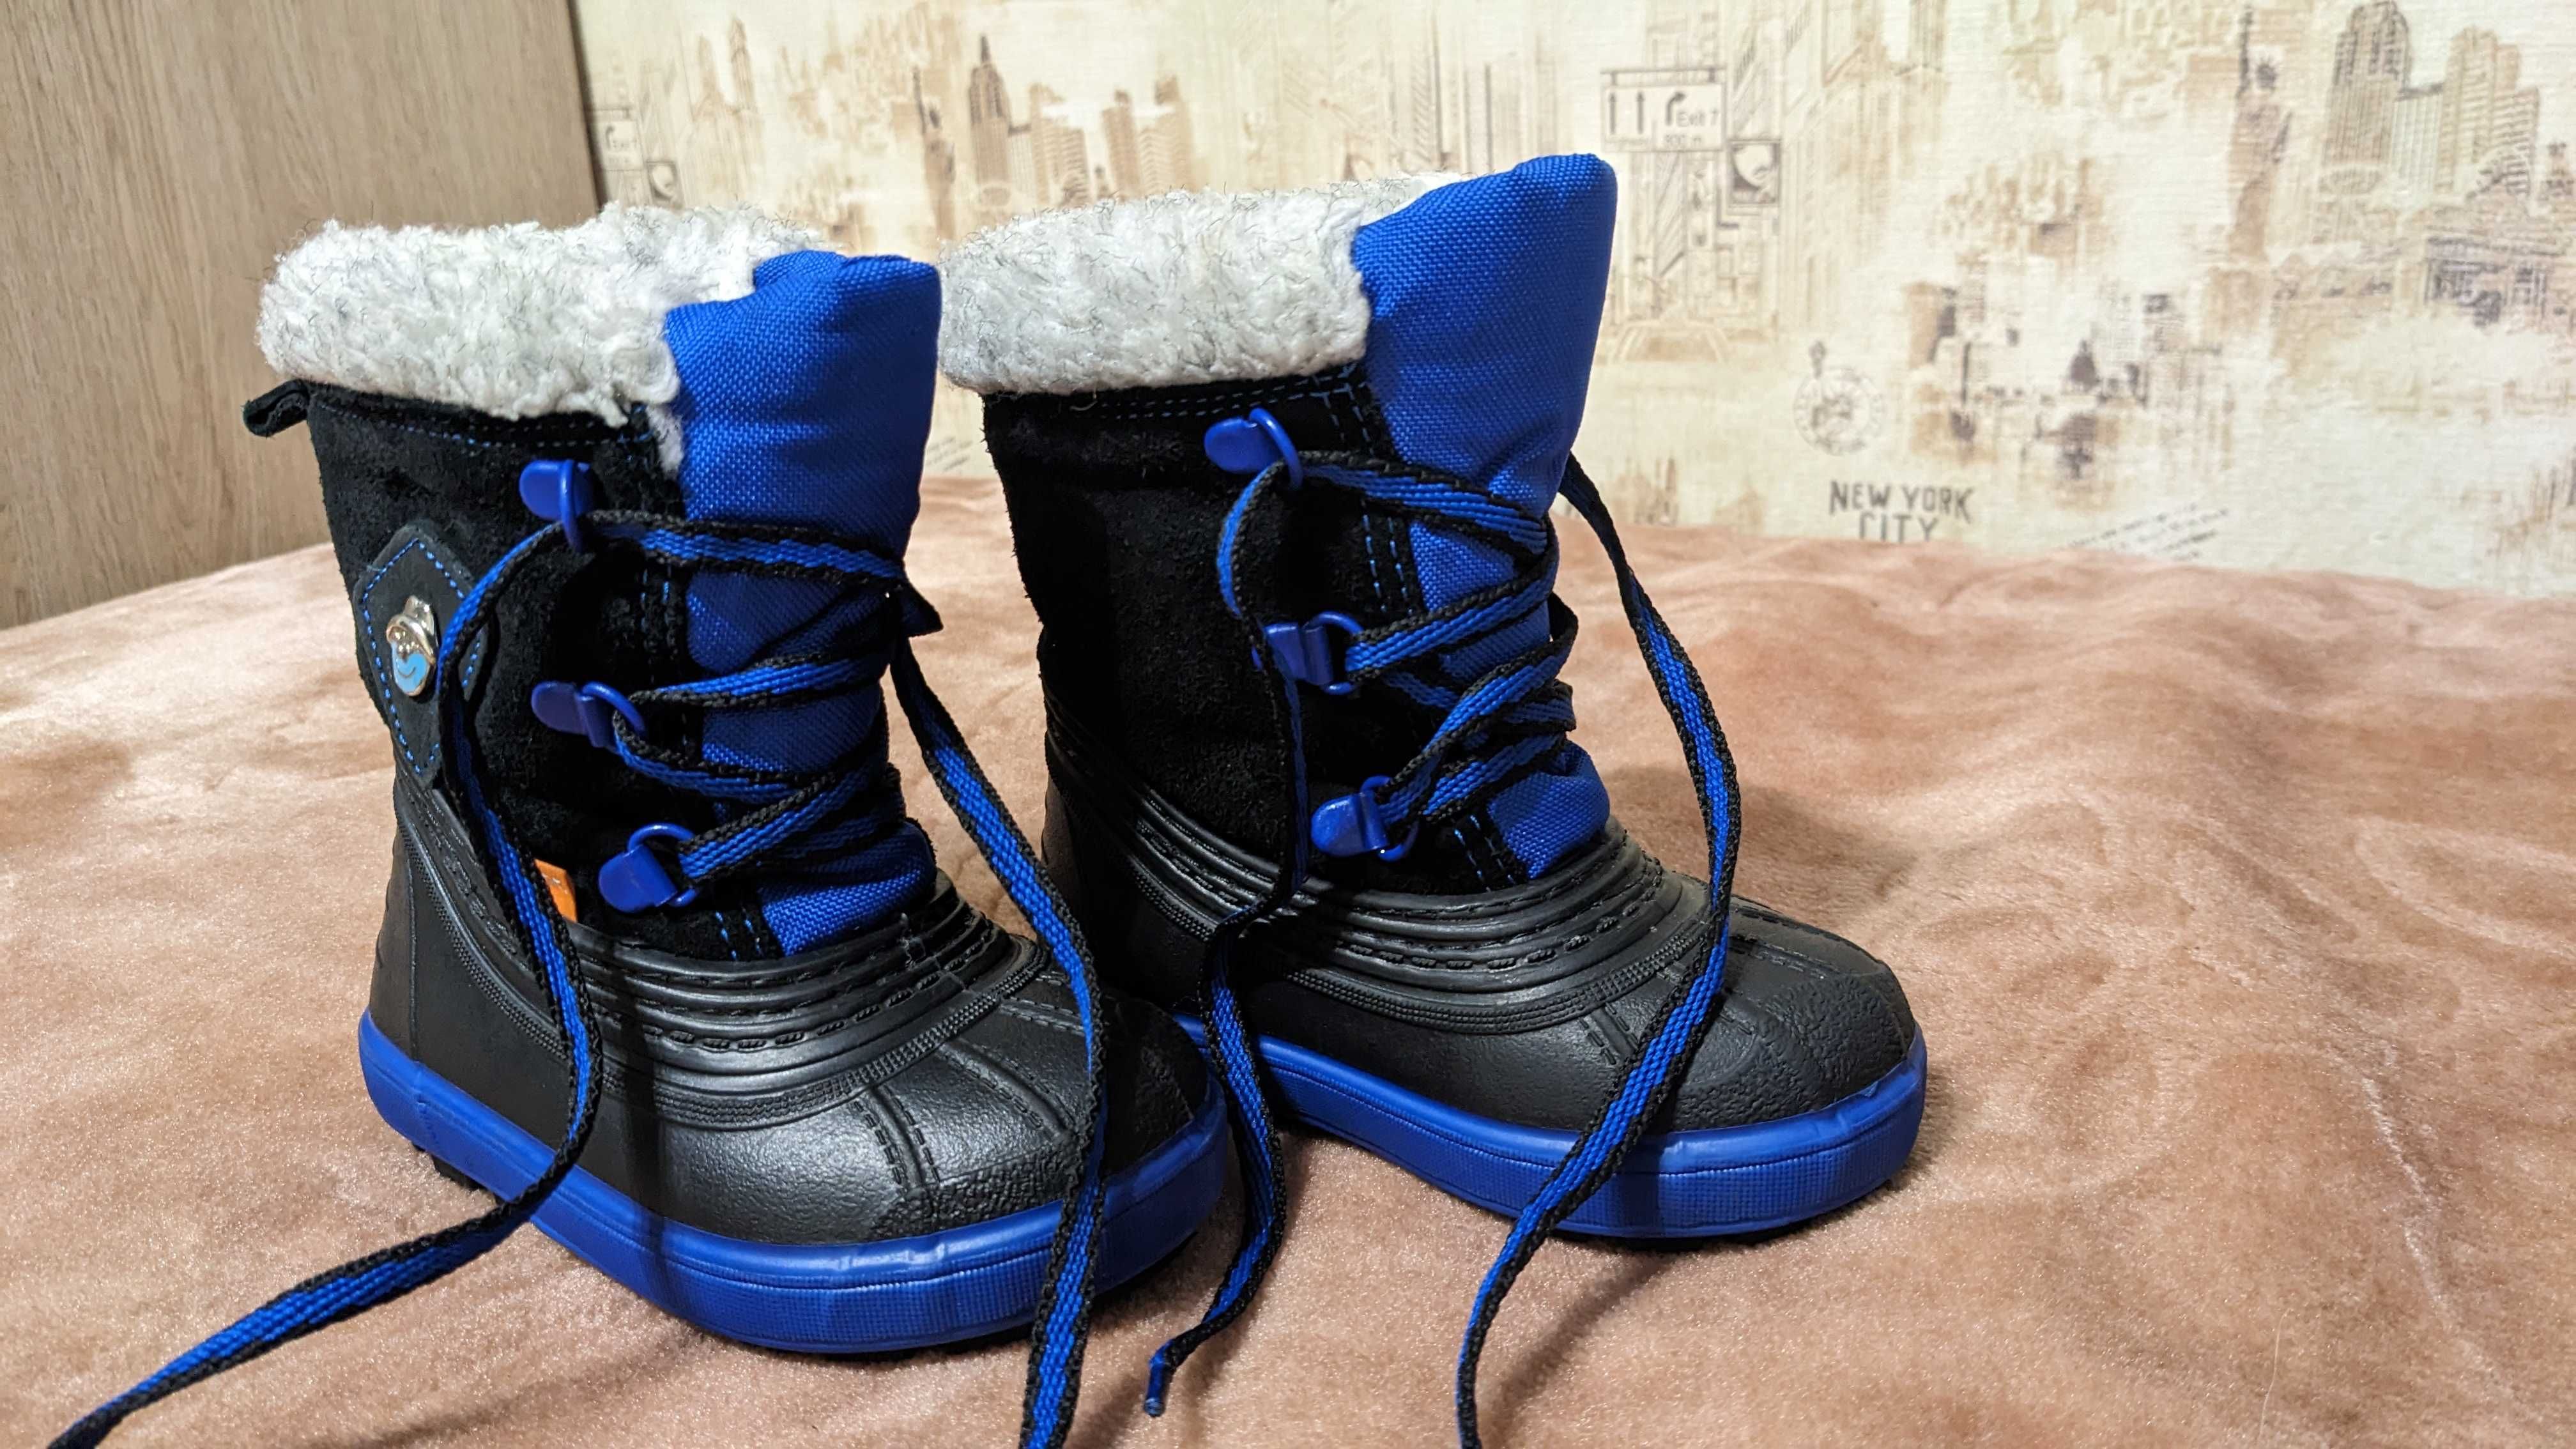 Ботинки demar размер 20-21, зимние сапожки demar, синие ботинки